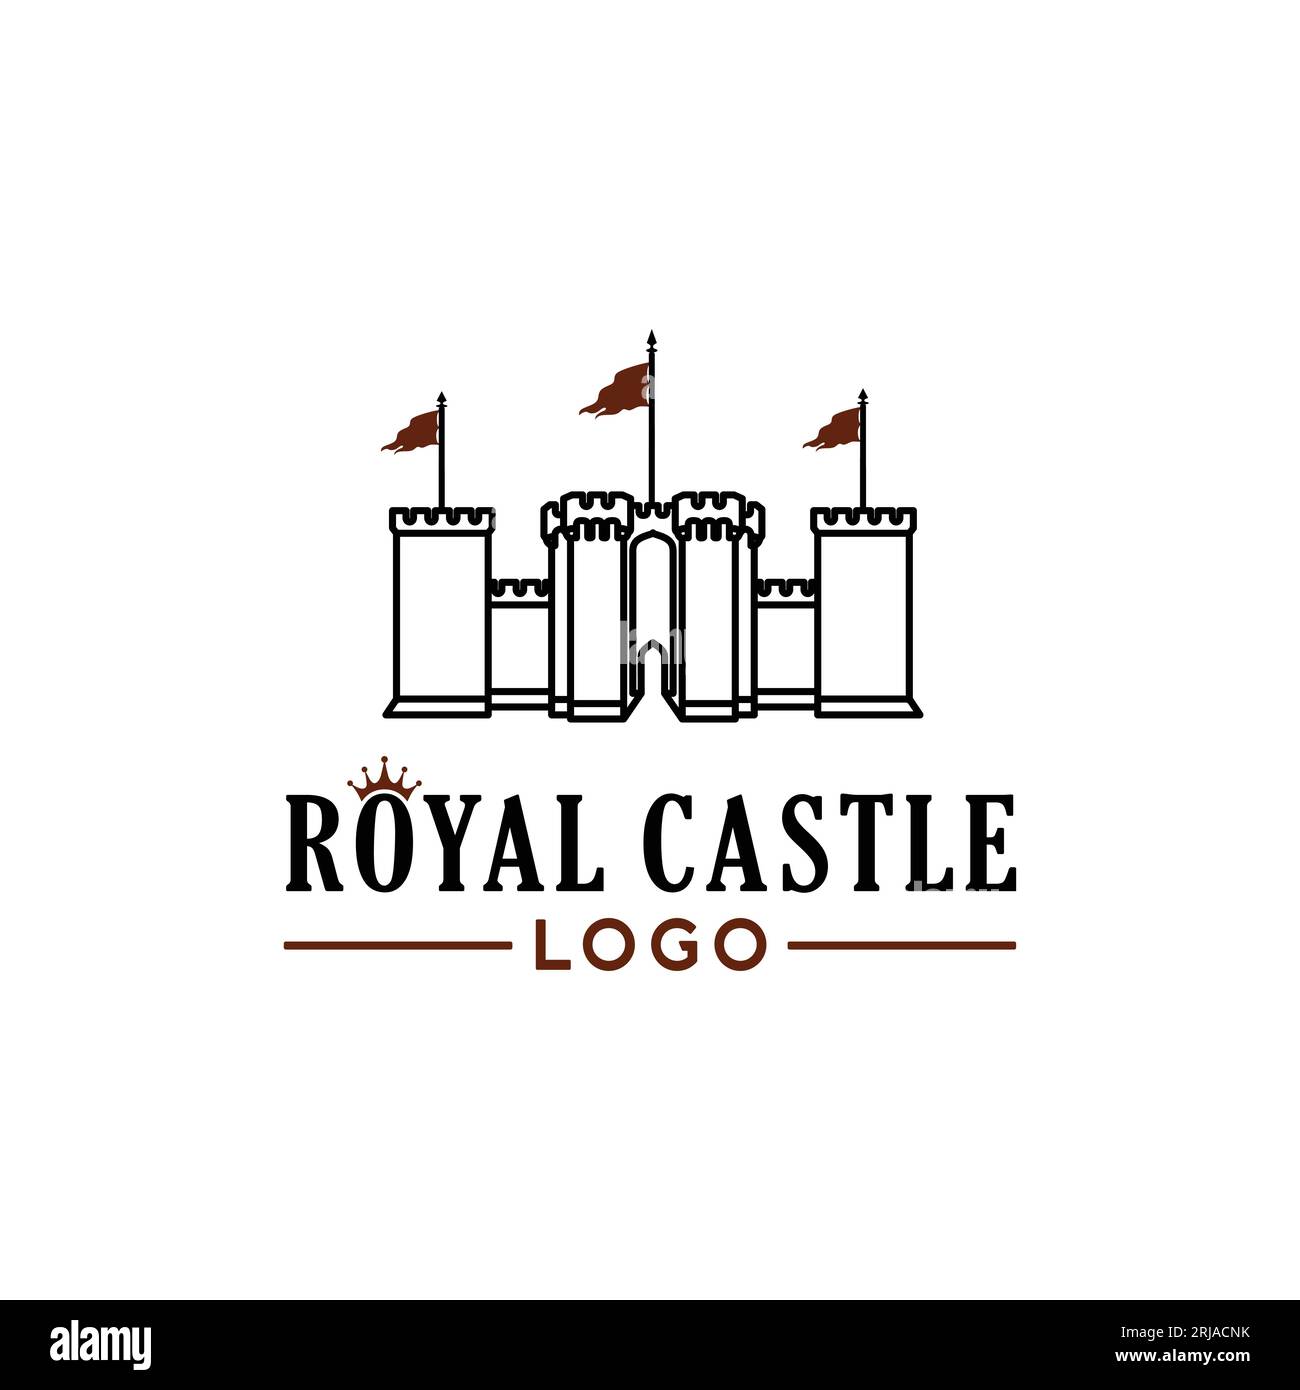 Minimalist Castle Line art logo design inspiration Stock Vector